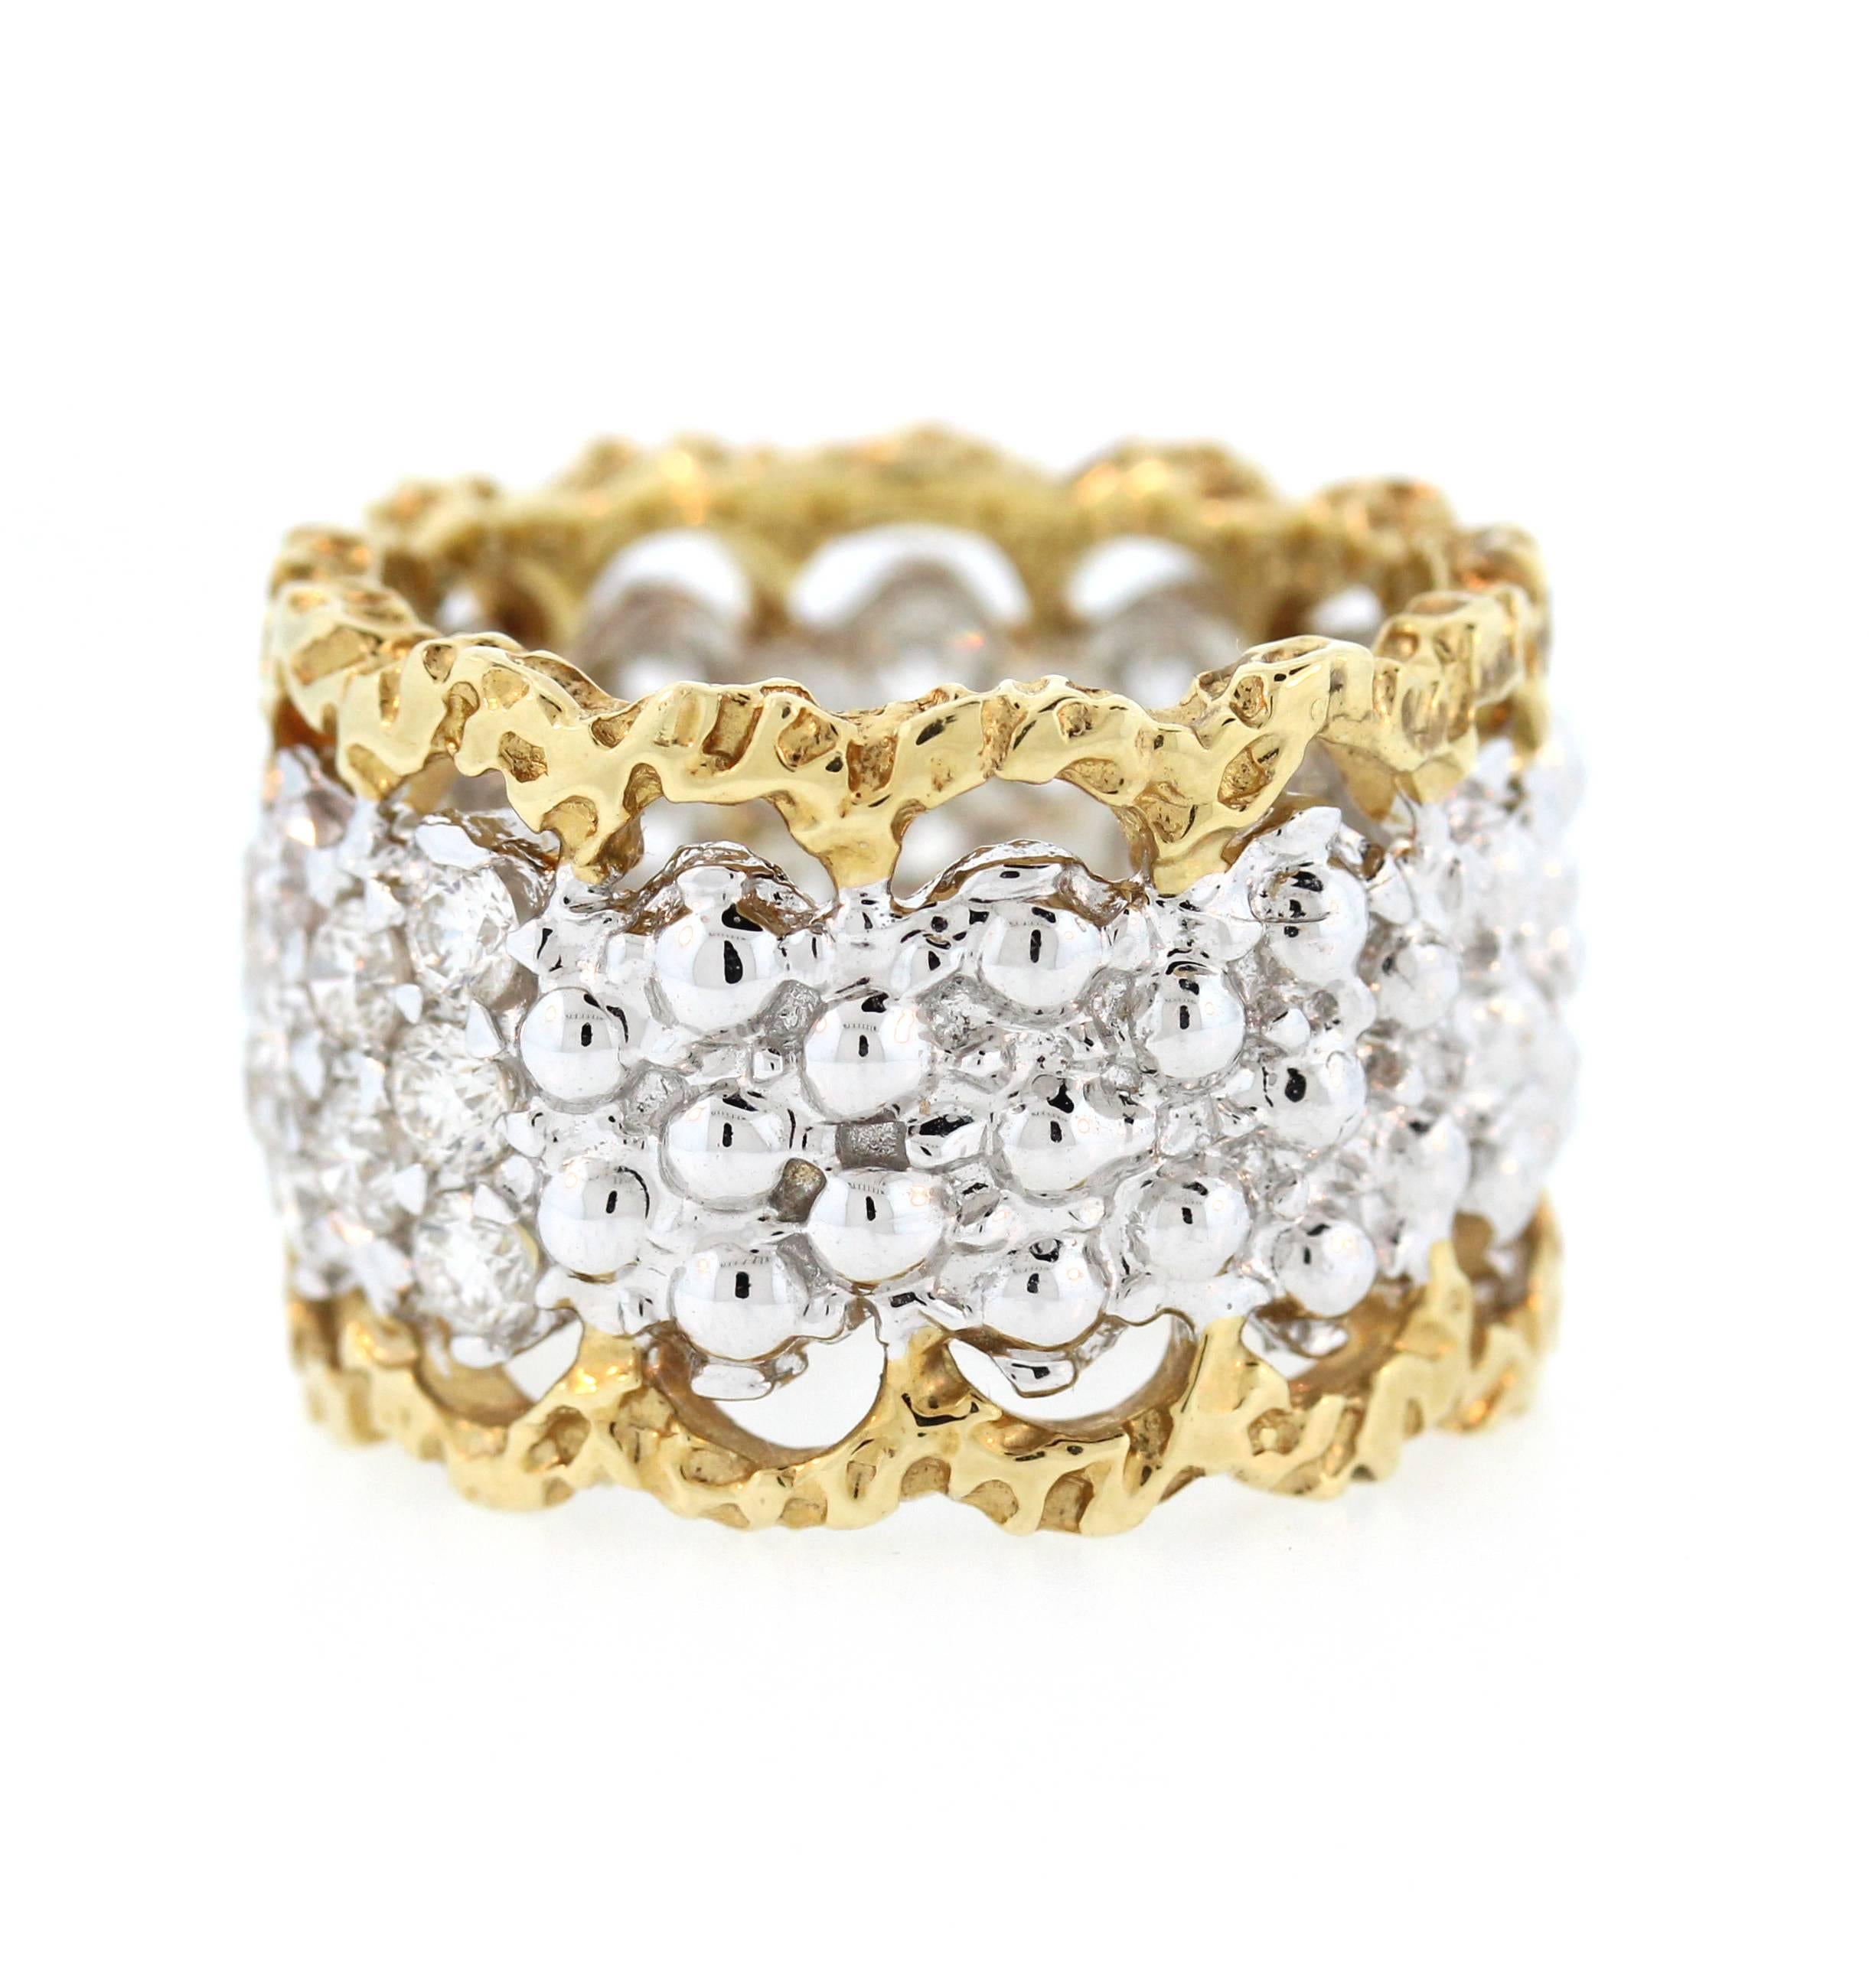 Women's Beautiful Two-Tone Gold and Diamond Band Ring